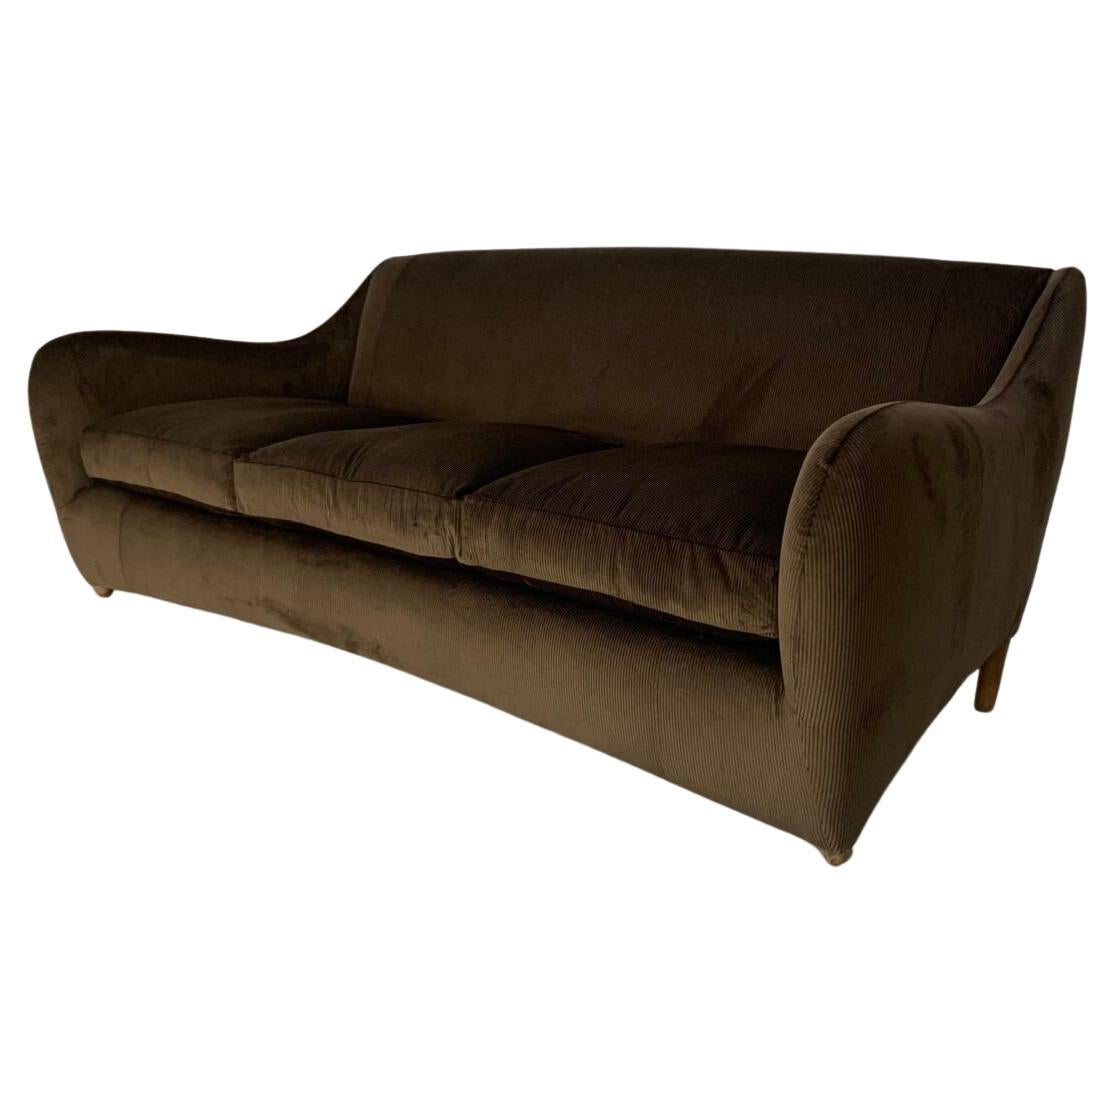 SCP Conran Matthew Hilton "Balzac" 3-Seat Sofa - In Dark Brown Cord For Sale